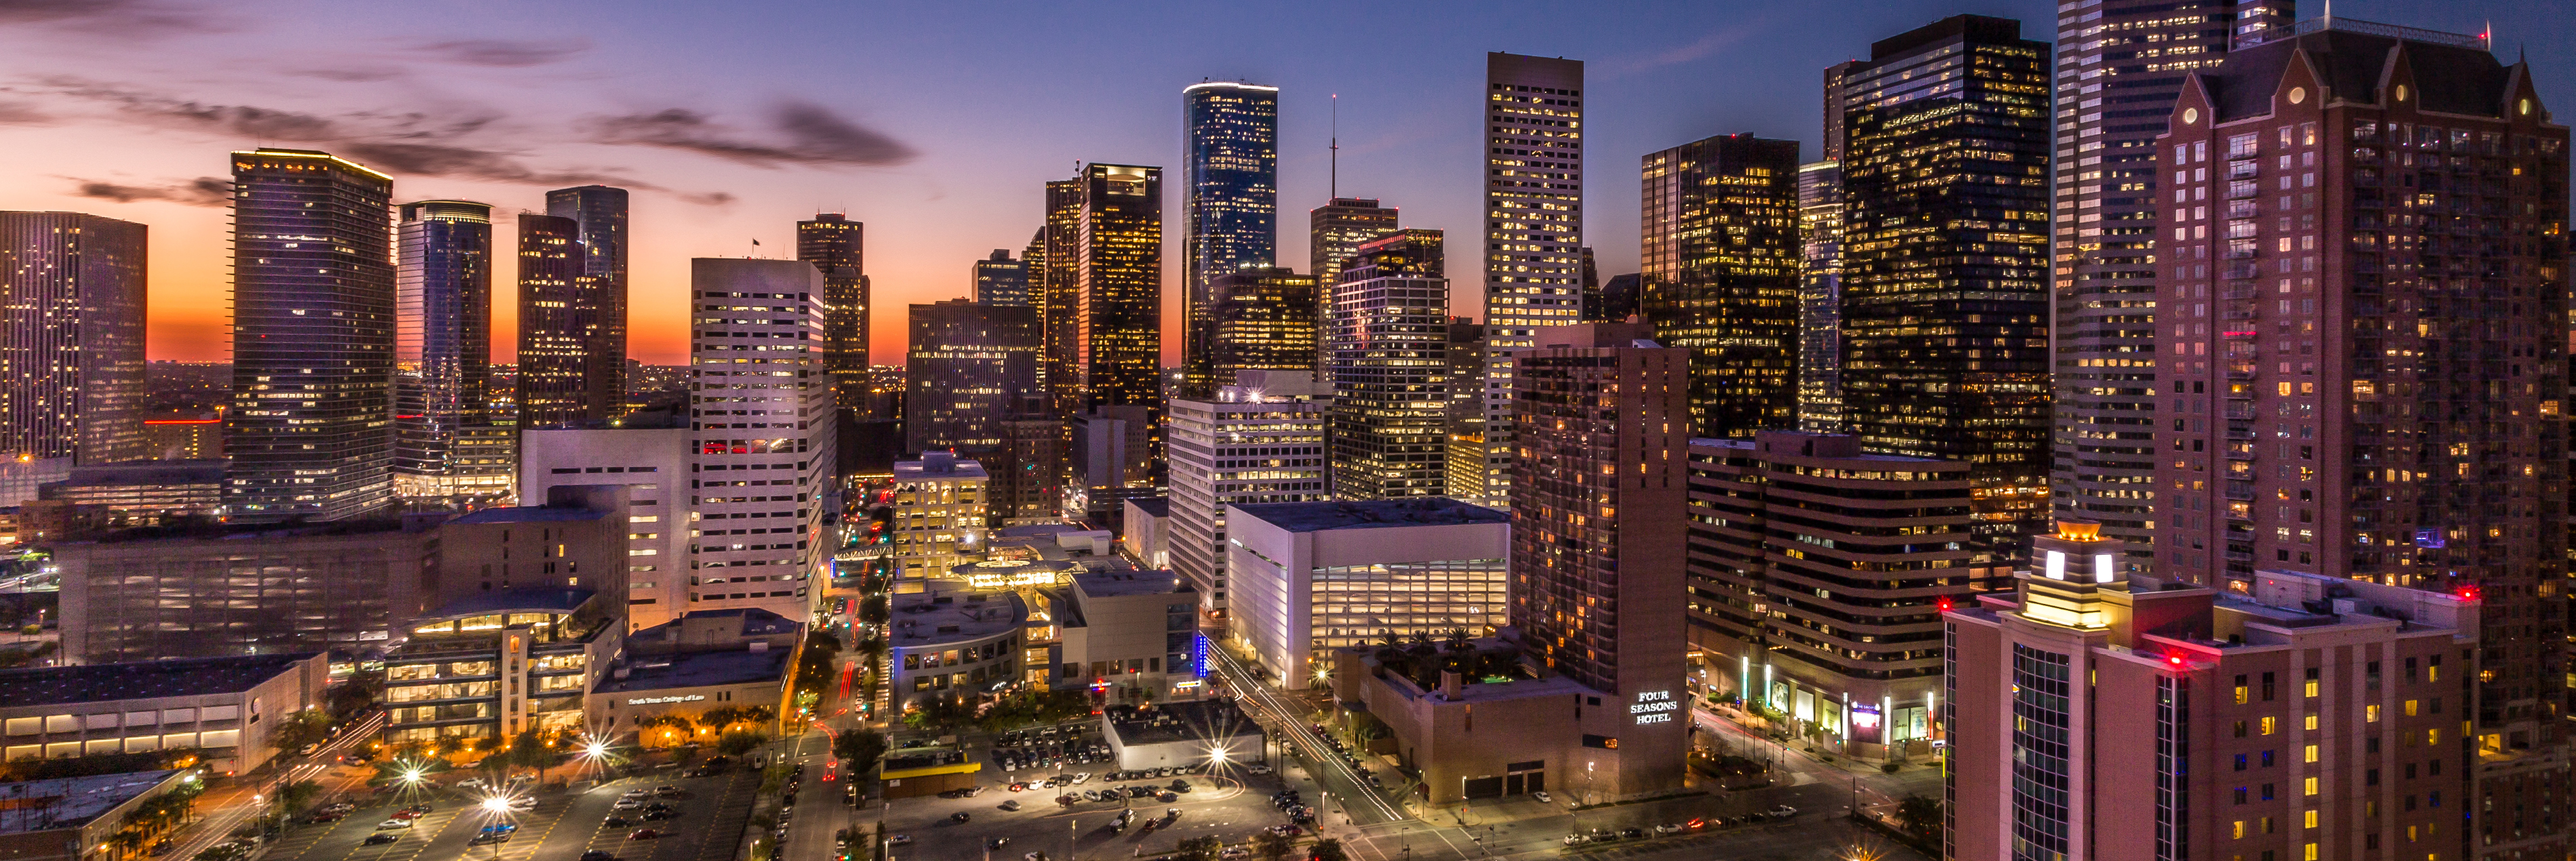 Houston cityscape